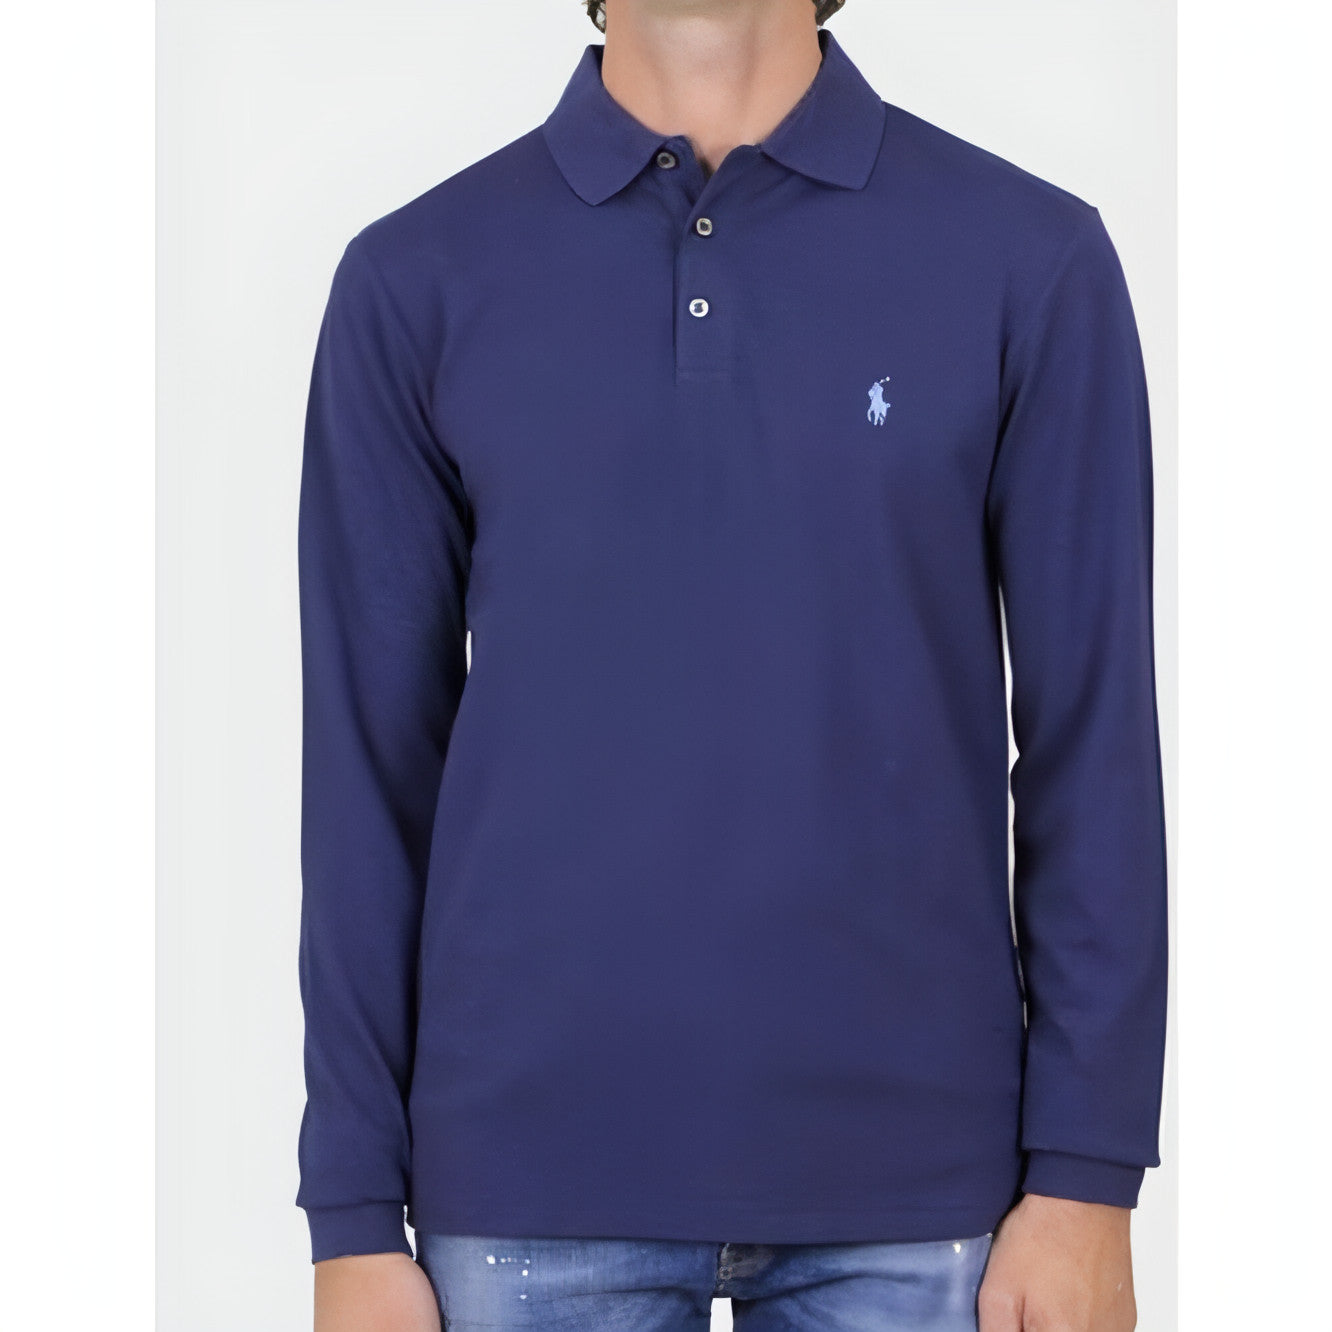 POLO RALPH LAUREN vyriški mėlyni Polo marškinėliai ilgomis rankovėmis Long sleeve polo shirt